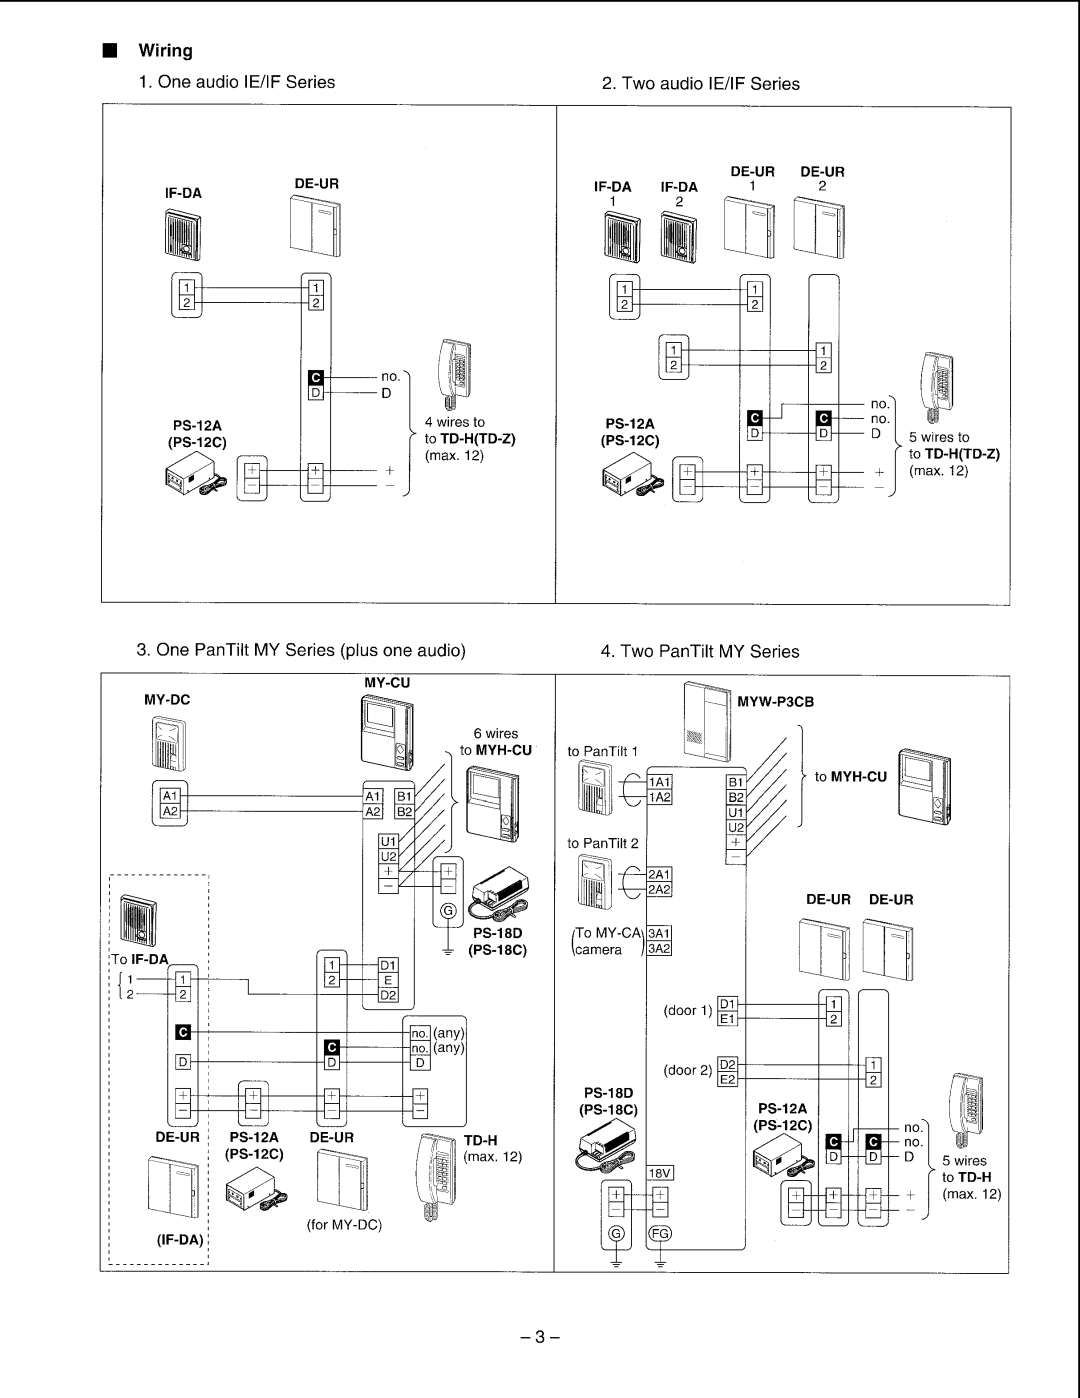 Aiphone DE-UR operation manual Wiring, One audio IE/IF Series, One PanTilt MY Series plus one audio, Two PanTilt MY Series 